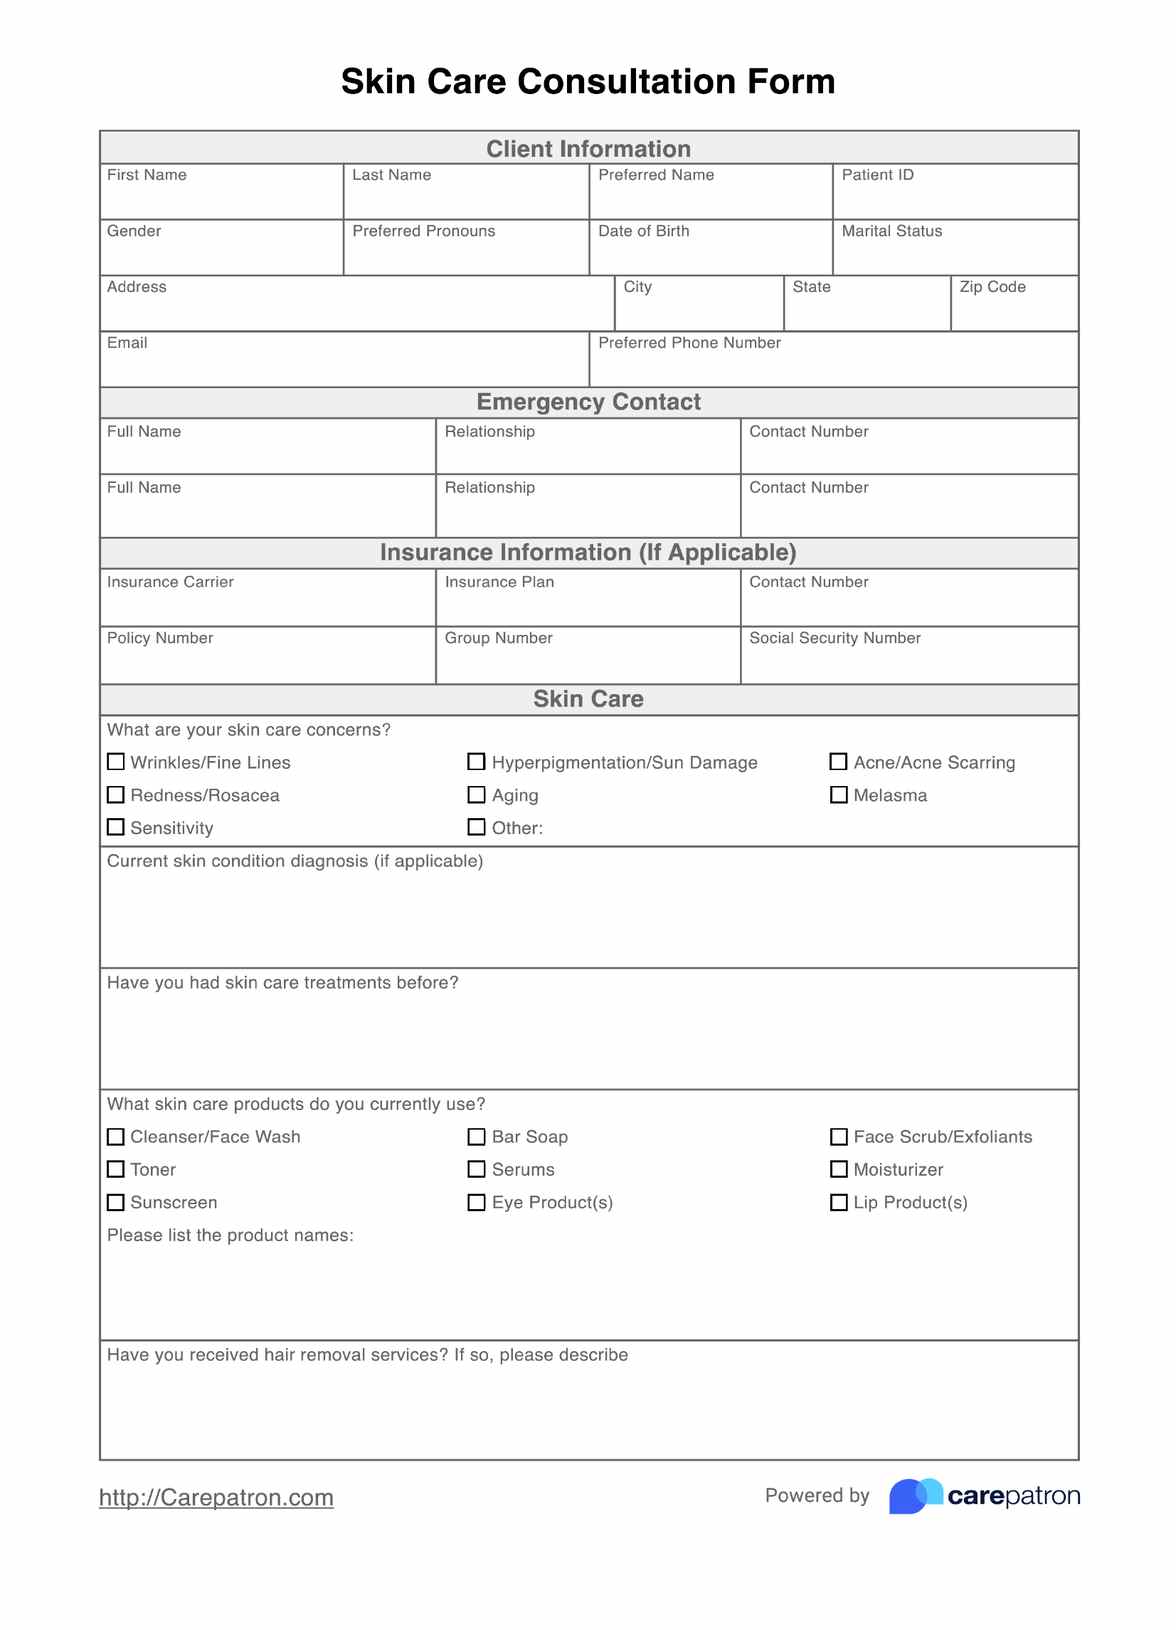 Skin Care Consultation Form PDF Example